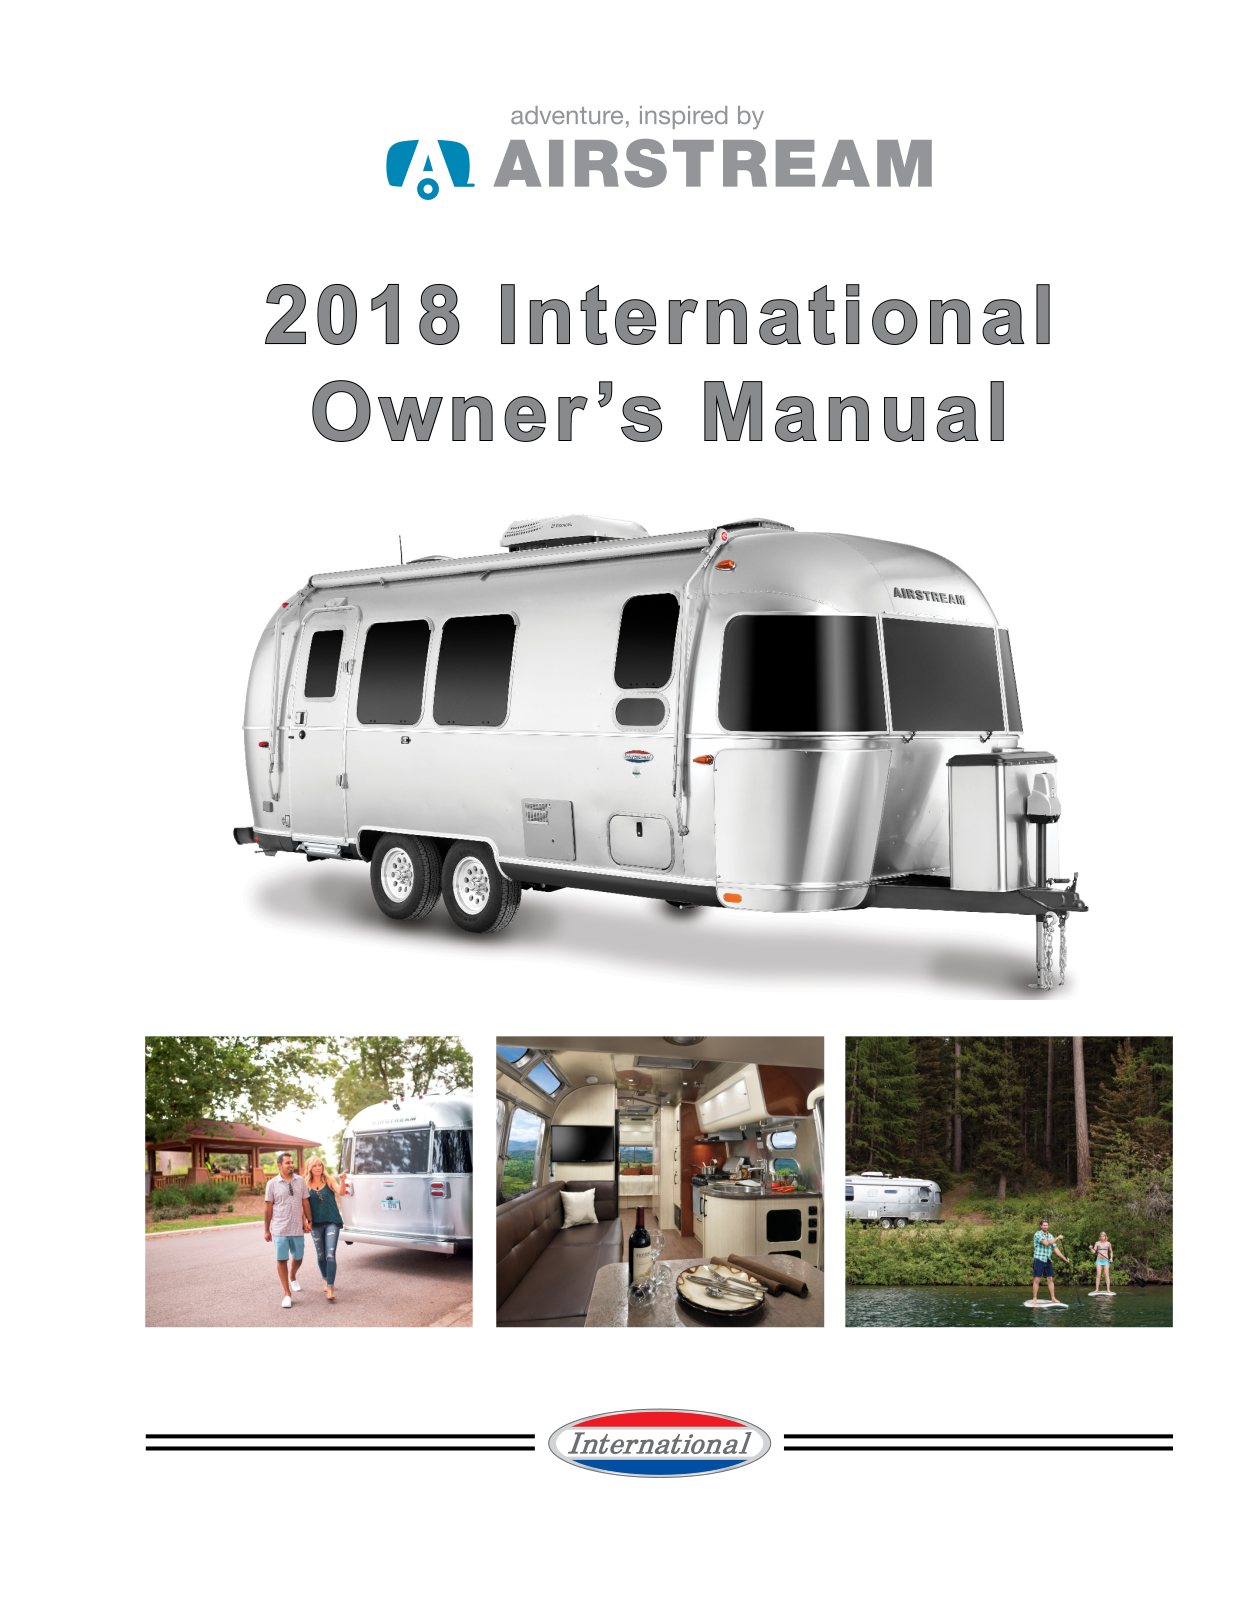 Airstream International 2018 Owner's Manual